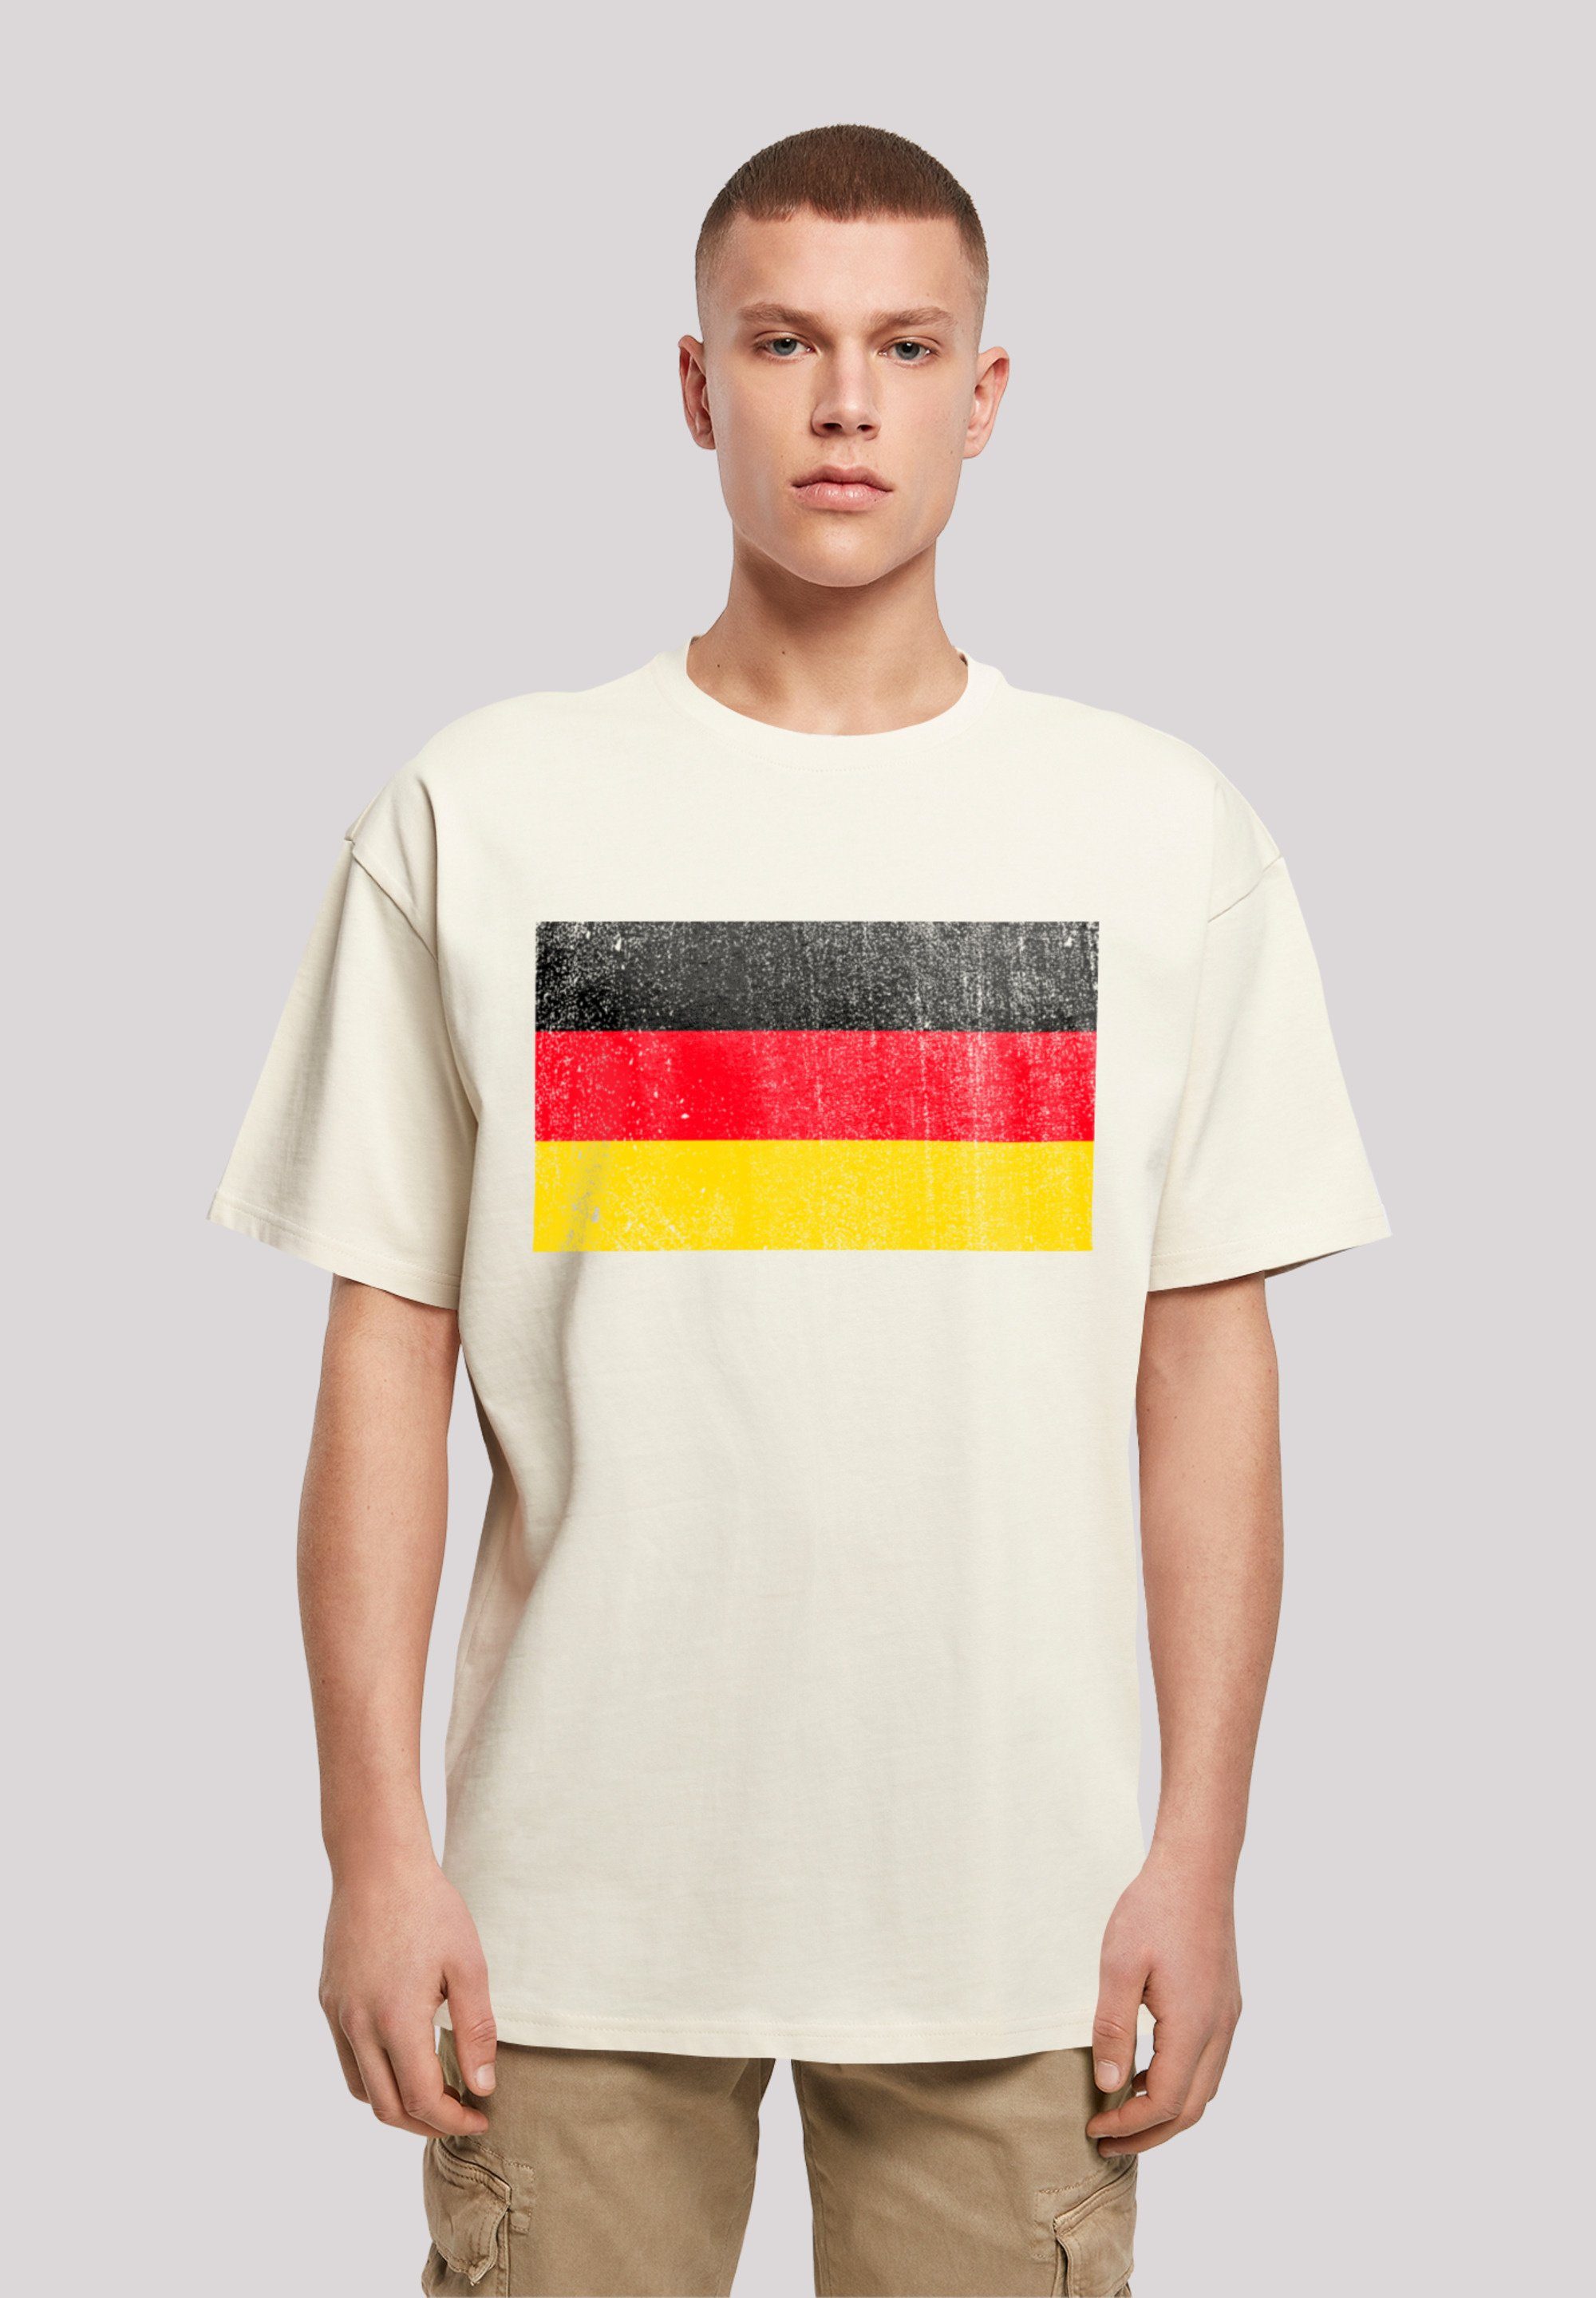 Print distressed Deutschland F4NT4STIC Germany Flagge T-Shirt sand